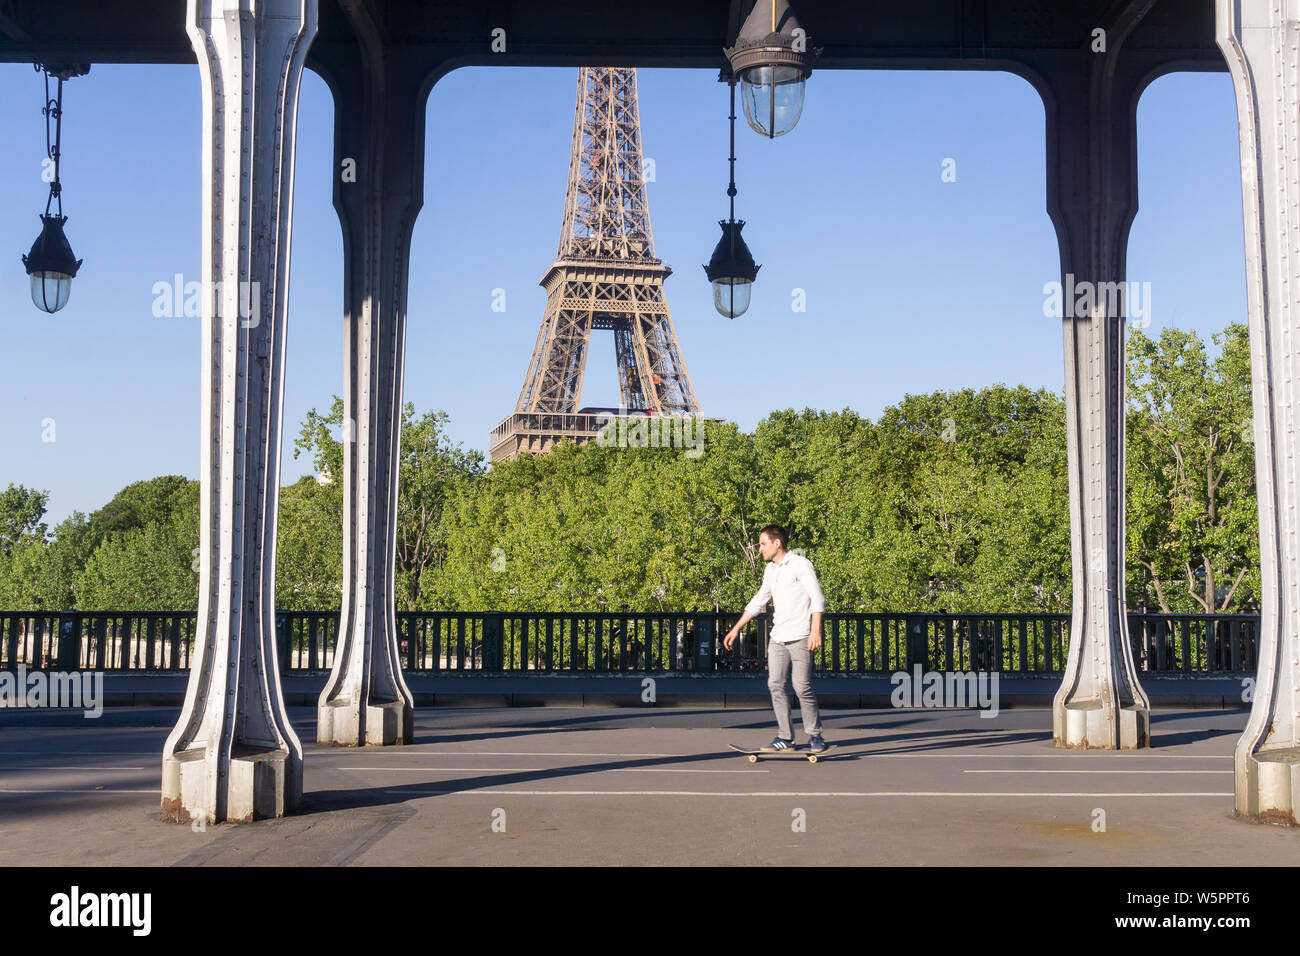 Paris skateboard - a man on skateboard riding over the Bir Hakeim bridge in Paris, France, Europe. Stock Photo